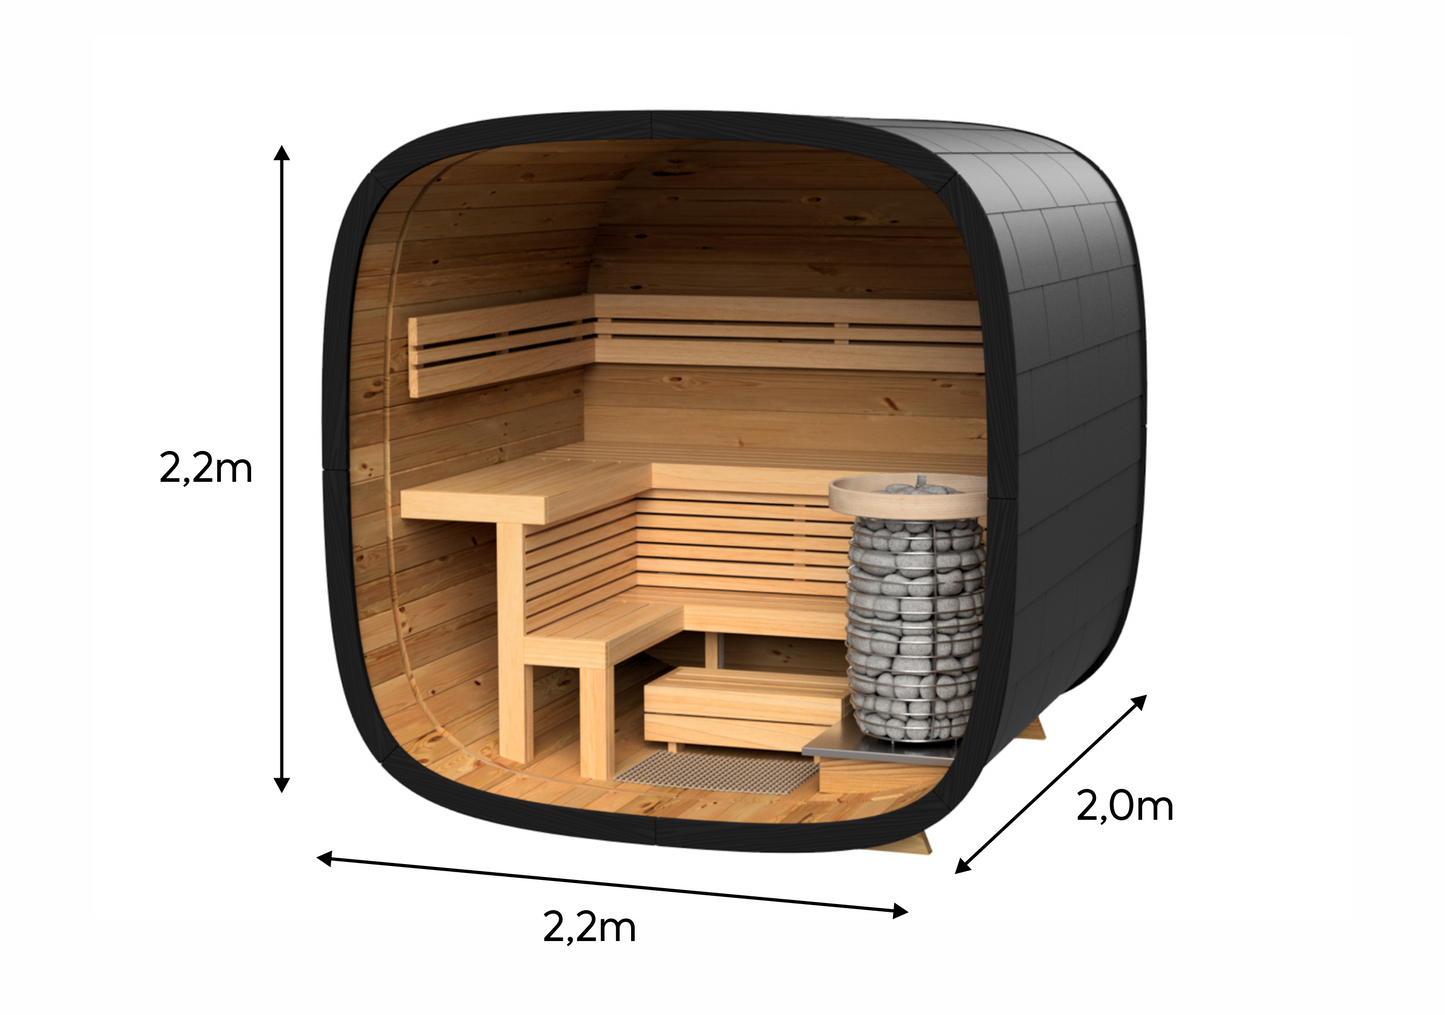 Tuscany Round Cube Mini 4-Person Traditional Outdoor Cabin Sauna